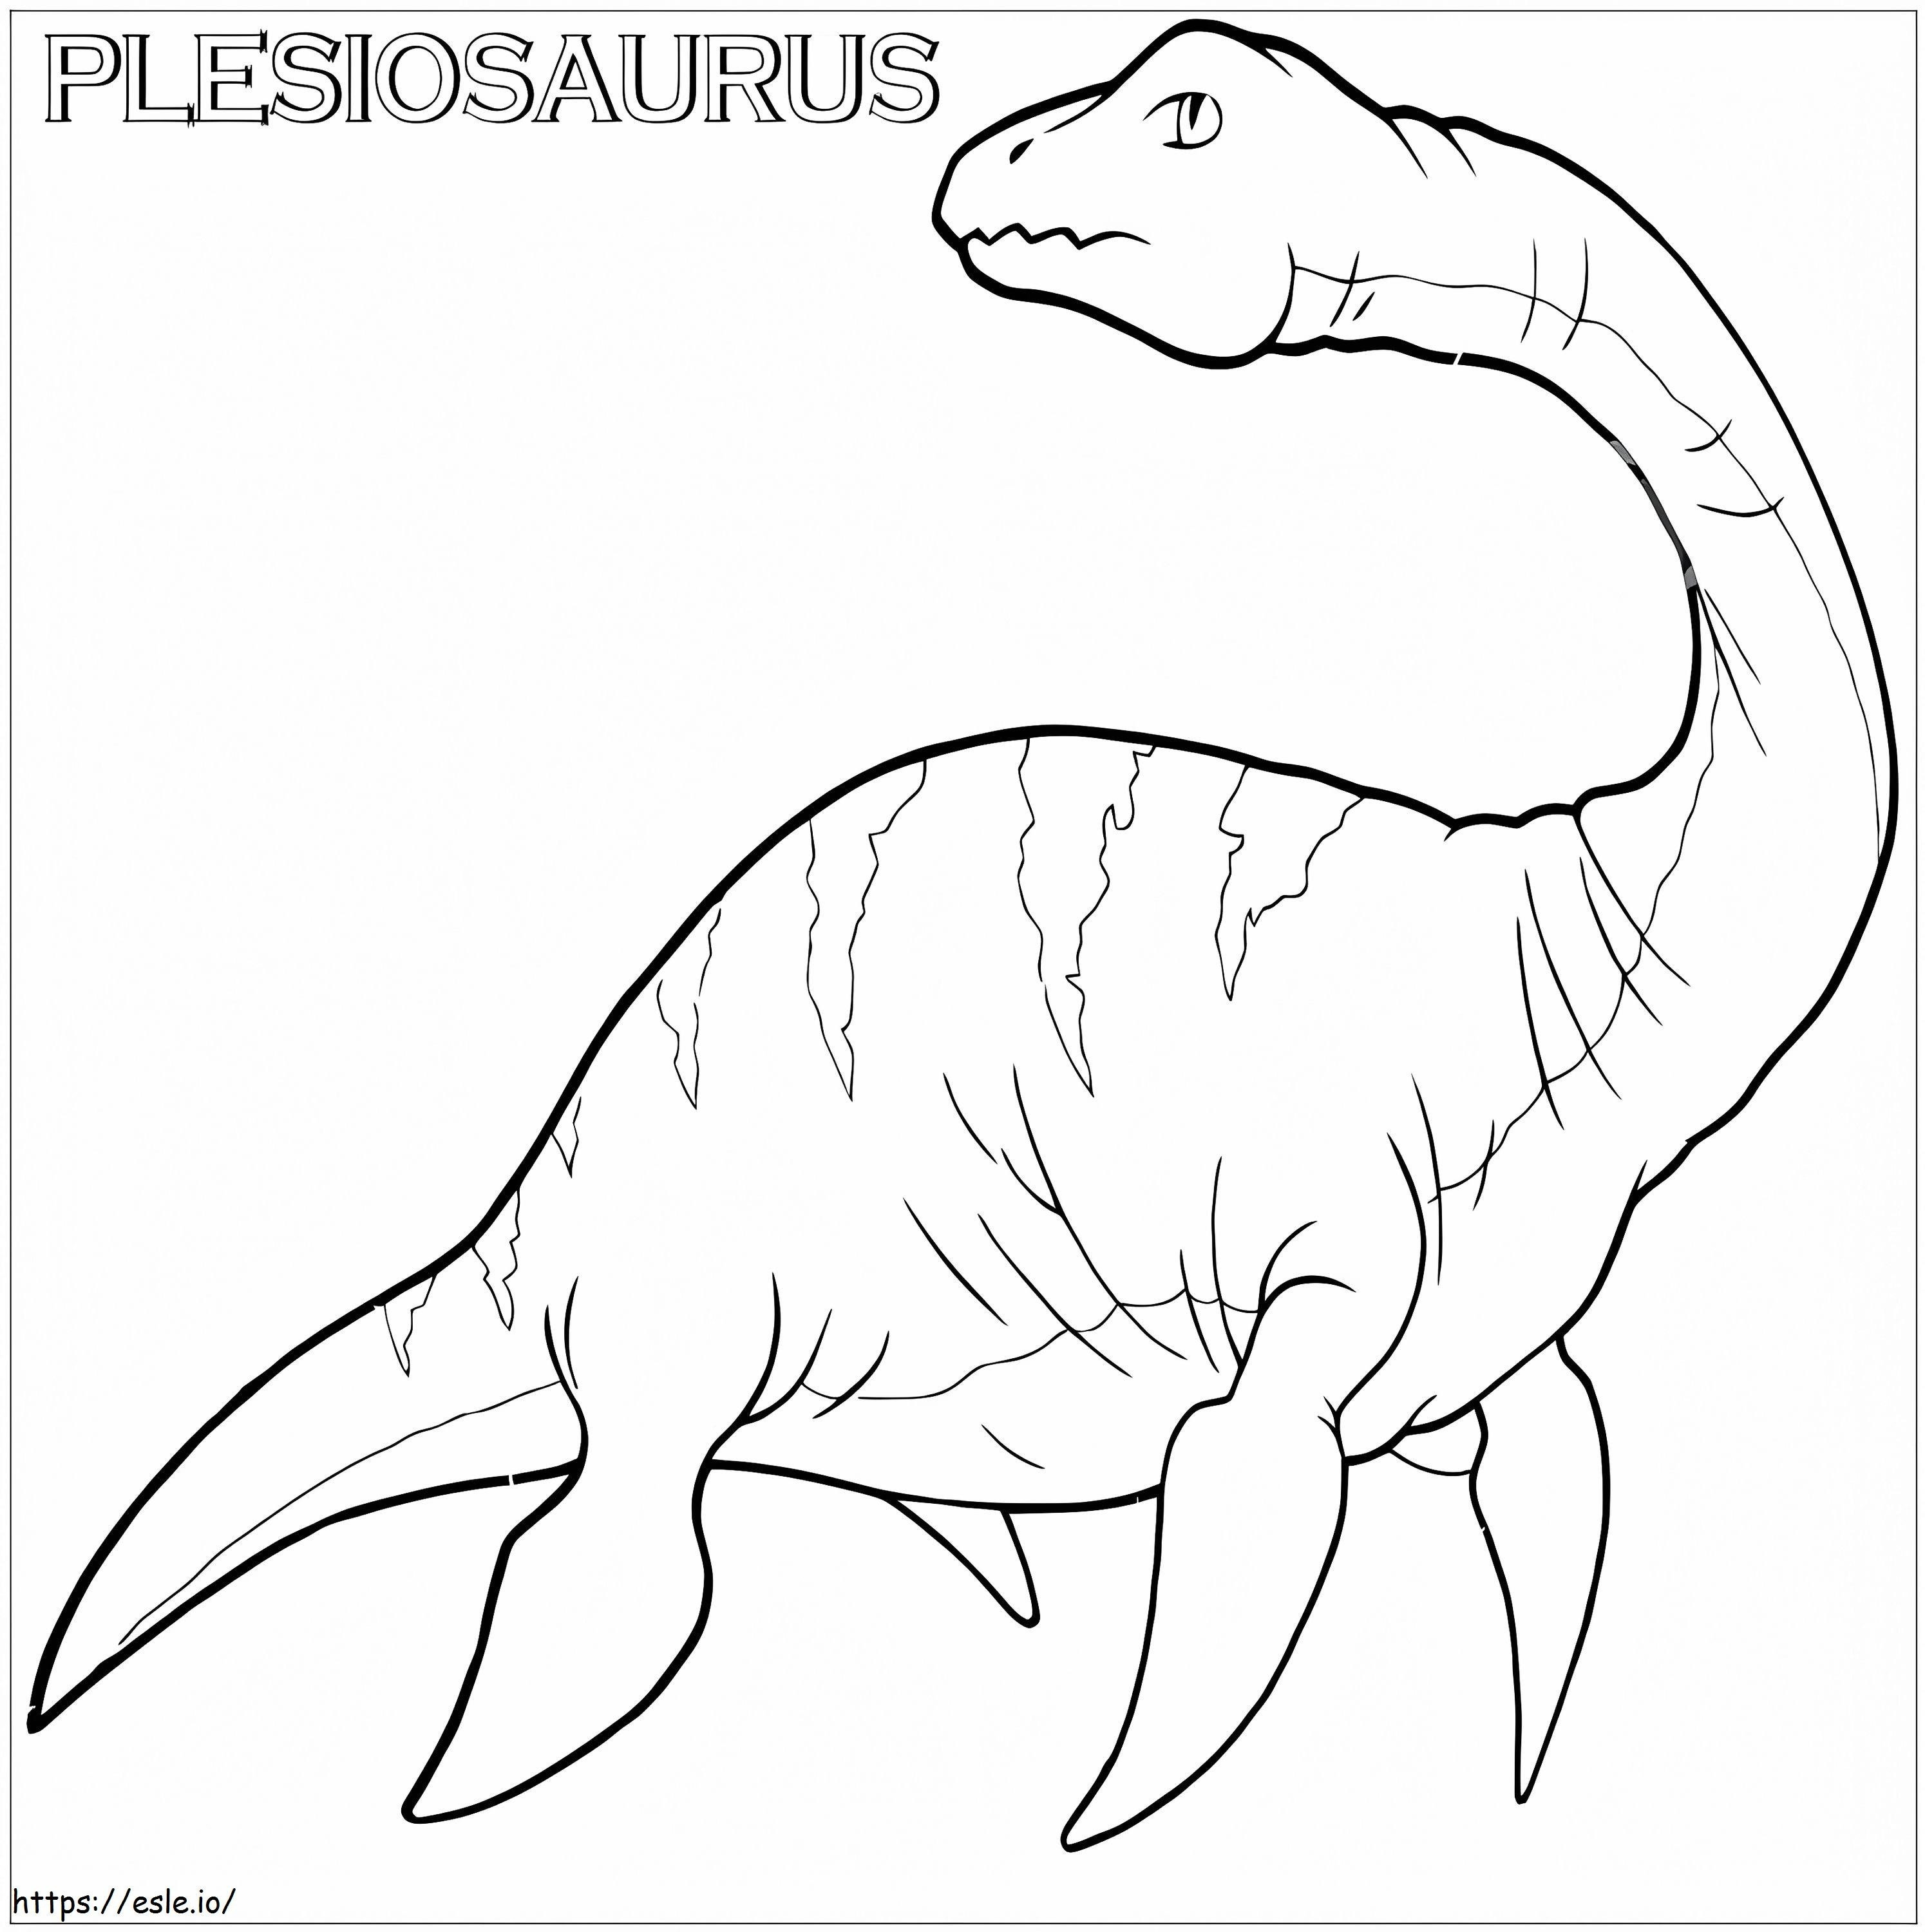 Plesiosaurus 3 coloring page